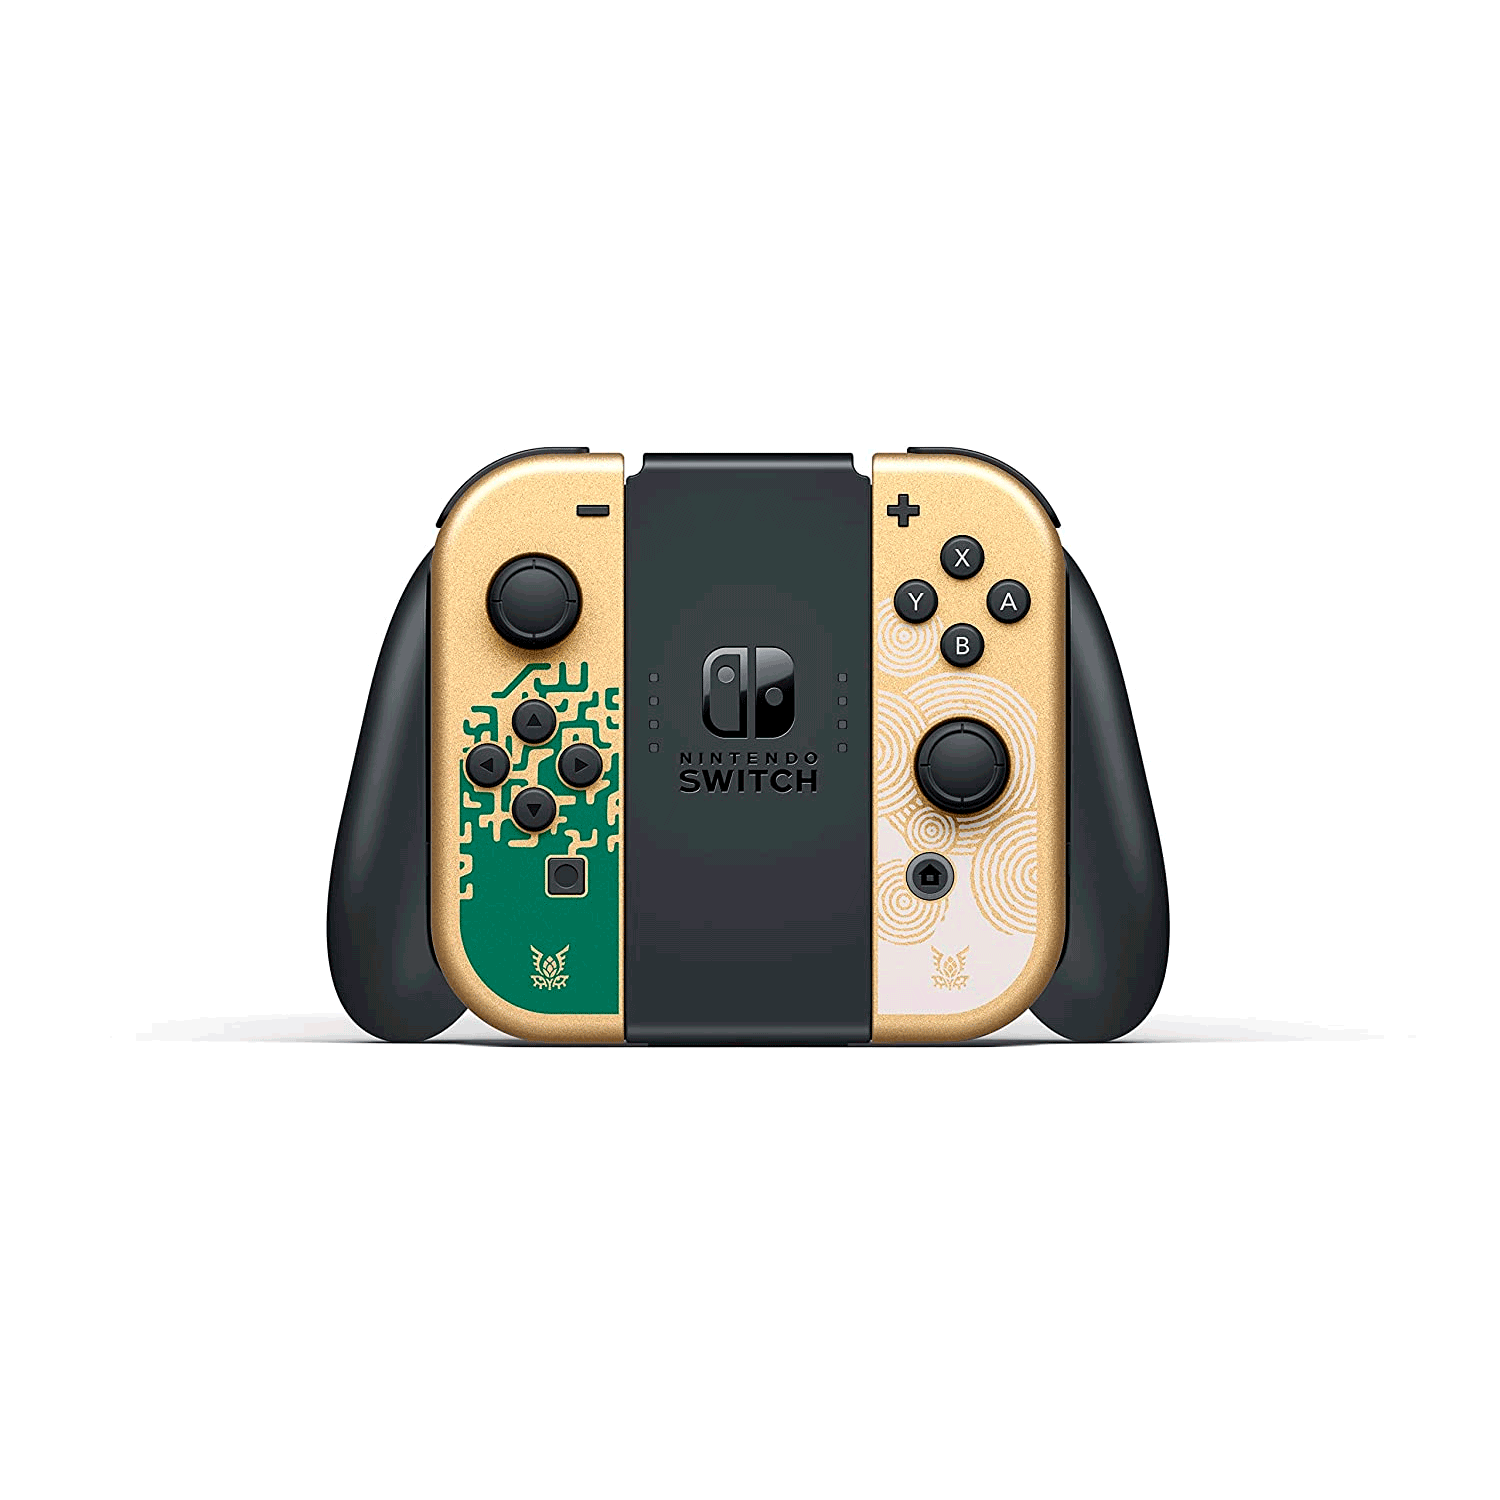 Console Nintendo Switch OLED 64GB Zelda Model - (HEG-S-KDAAA)